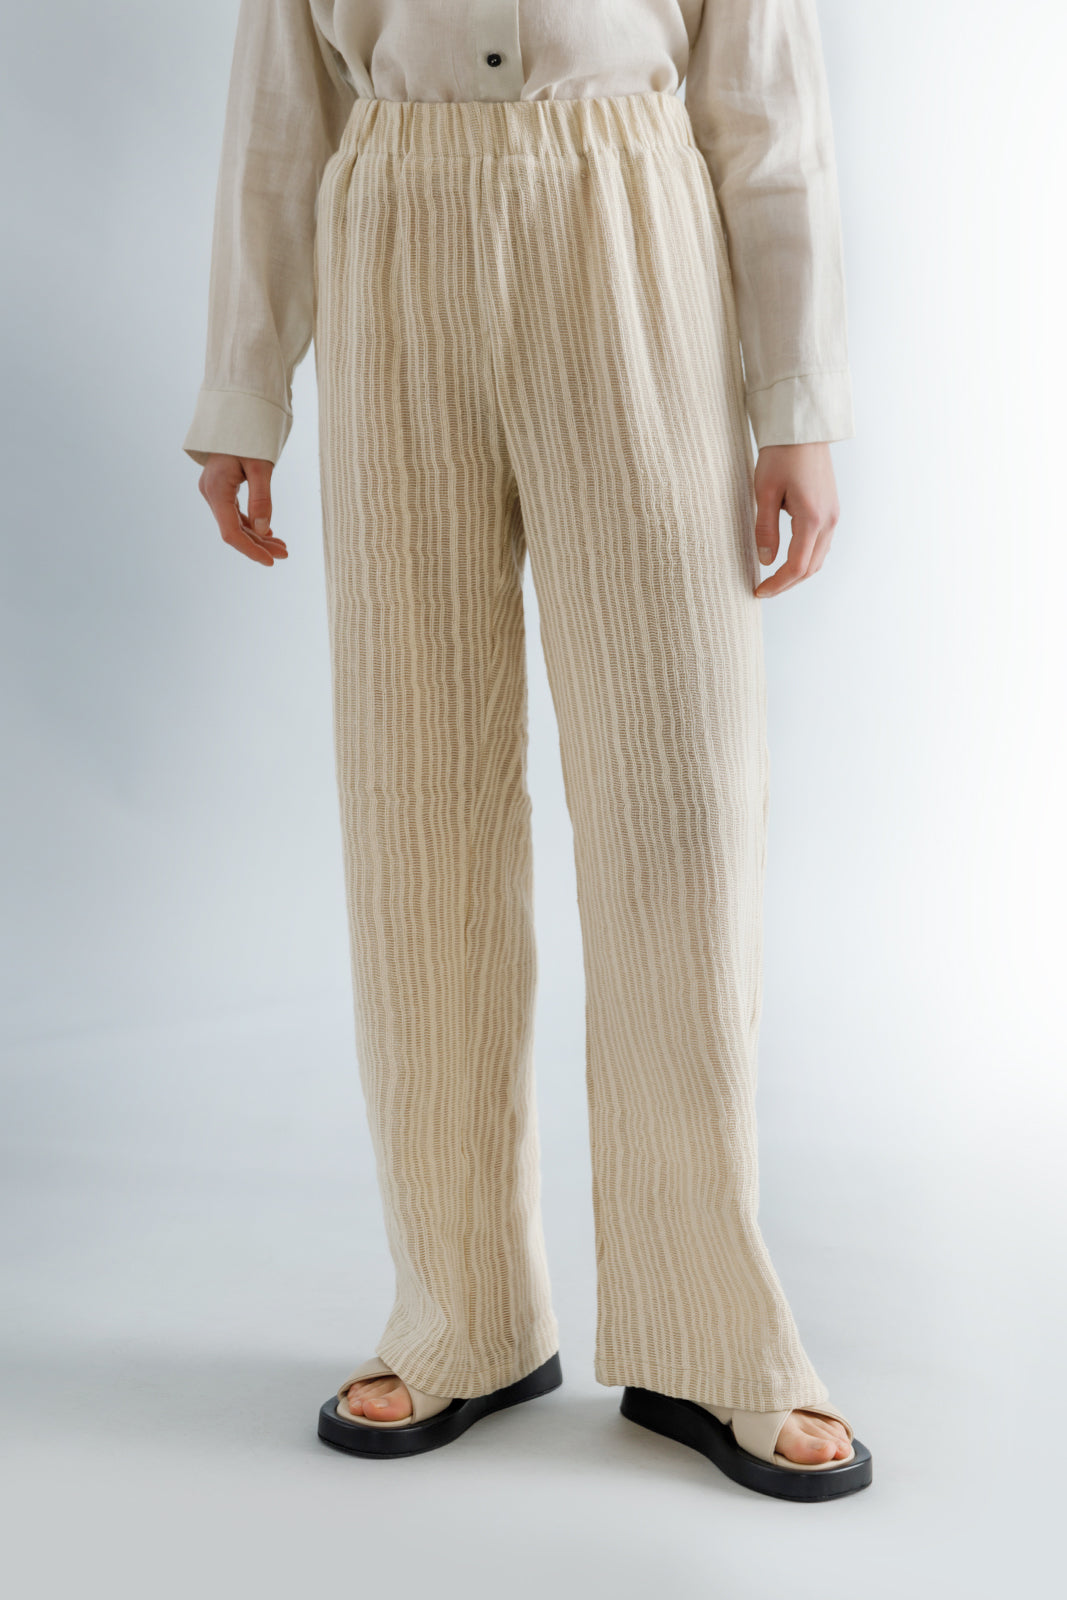 Linen Beige Pants with stripes